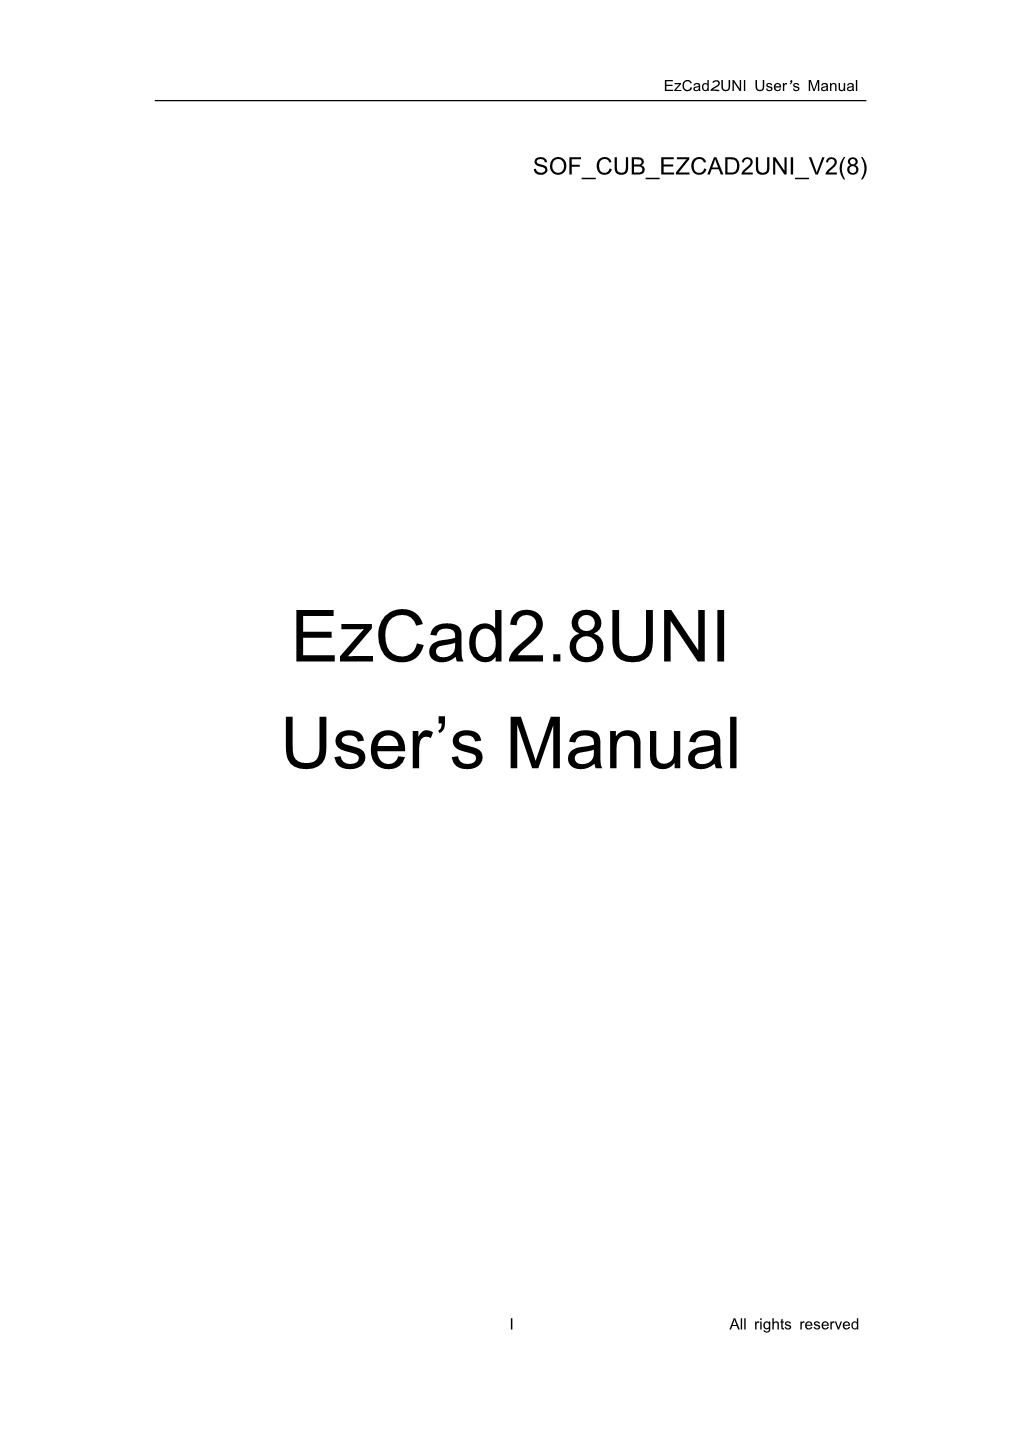 Ezcad2.8UNI User's Manual